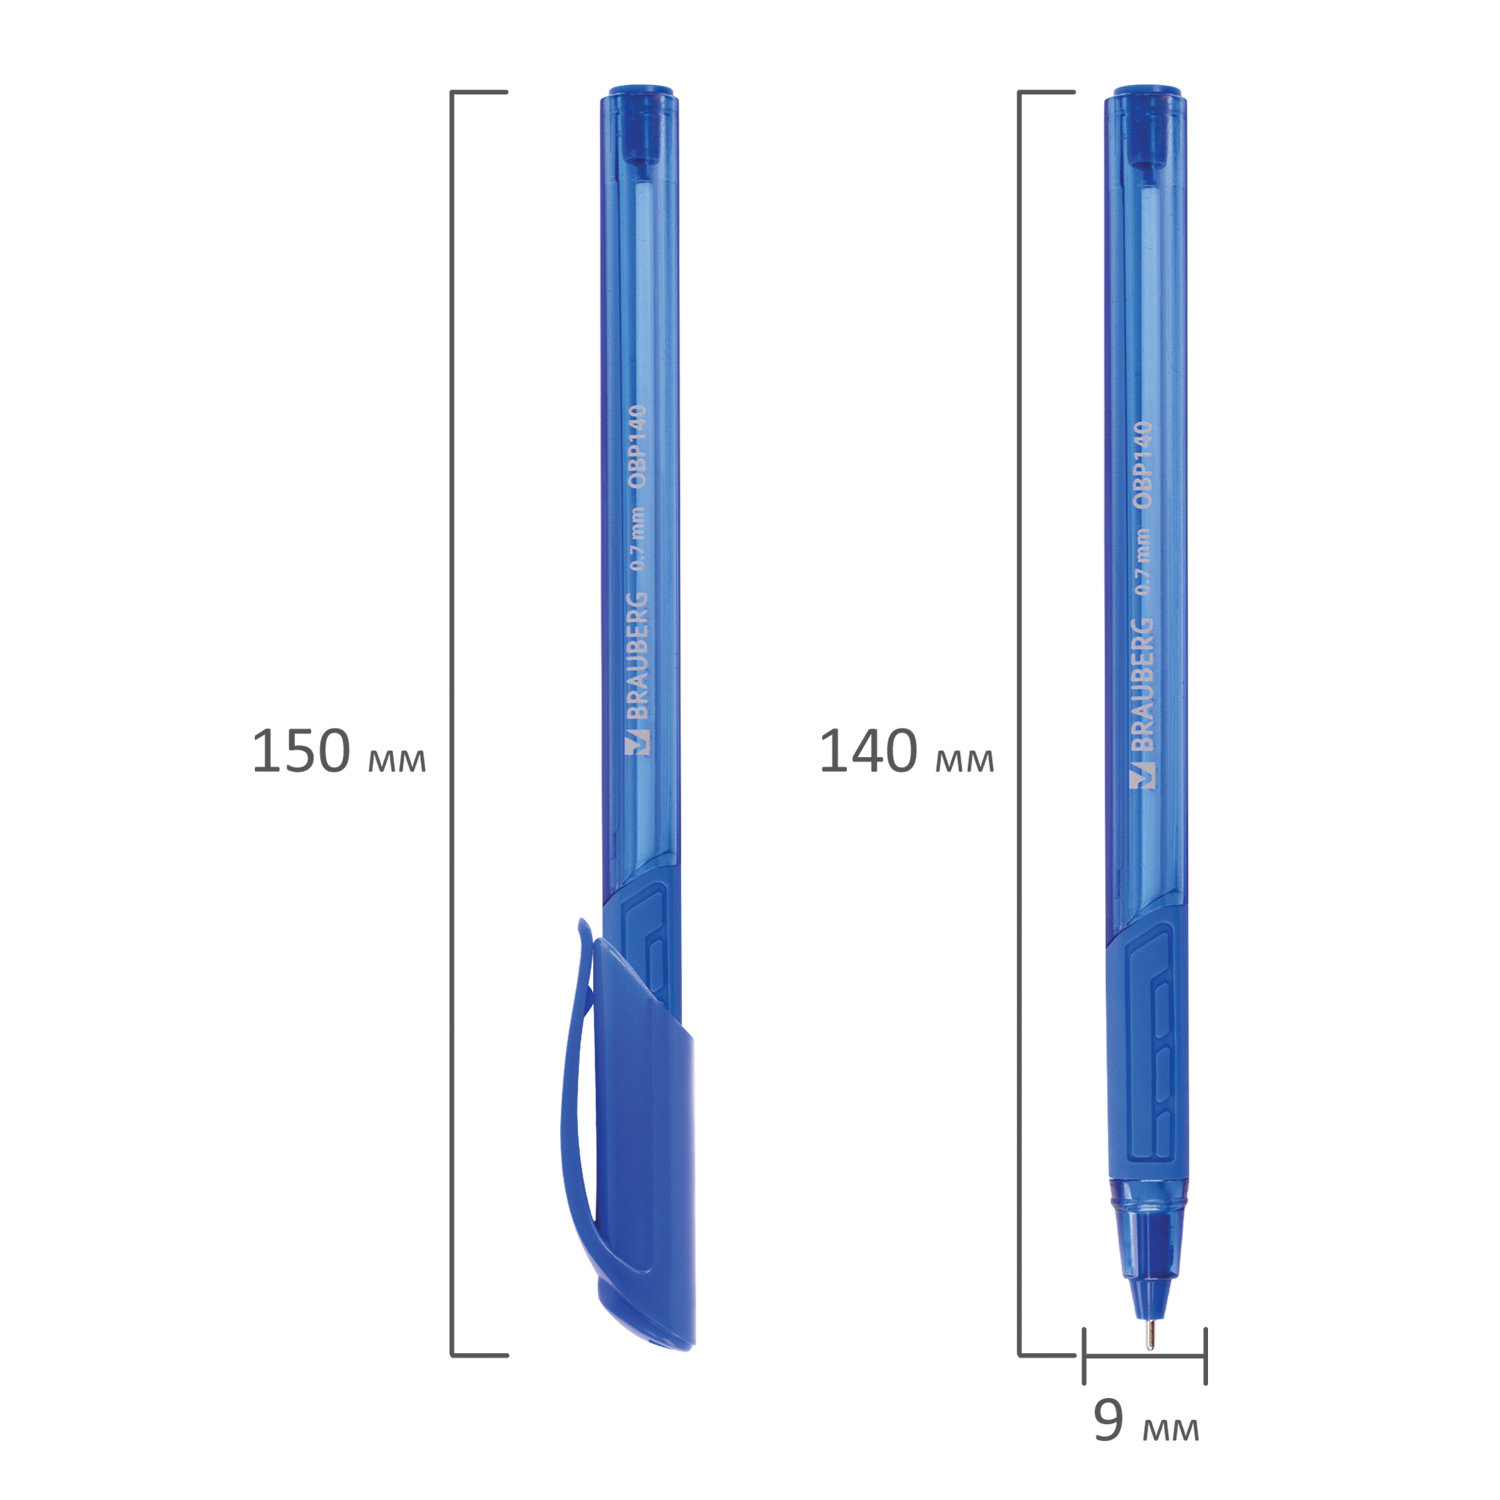 Ручка шариковая масляная BRAUBERG "Extra Glide GT Tone", СИНЯЯ, узел 0,7 мм, линия письма 0,35 мм